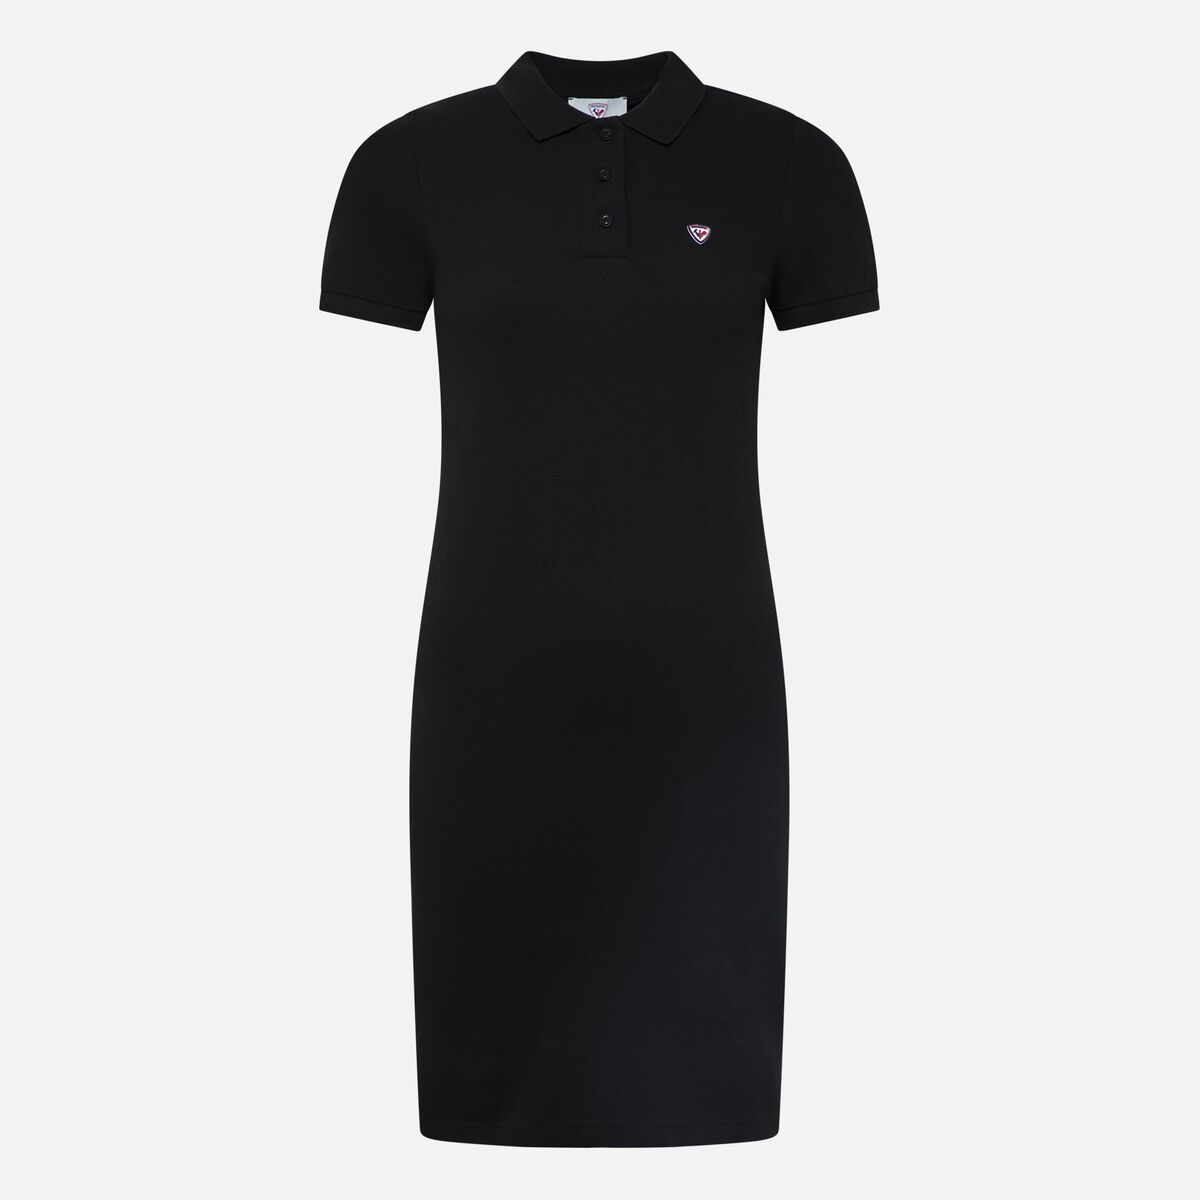 Rossignol Women's polo dress black